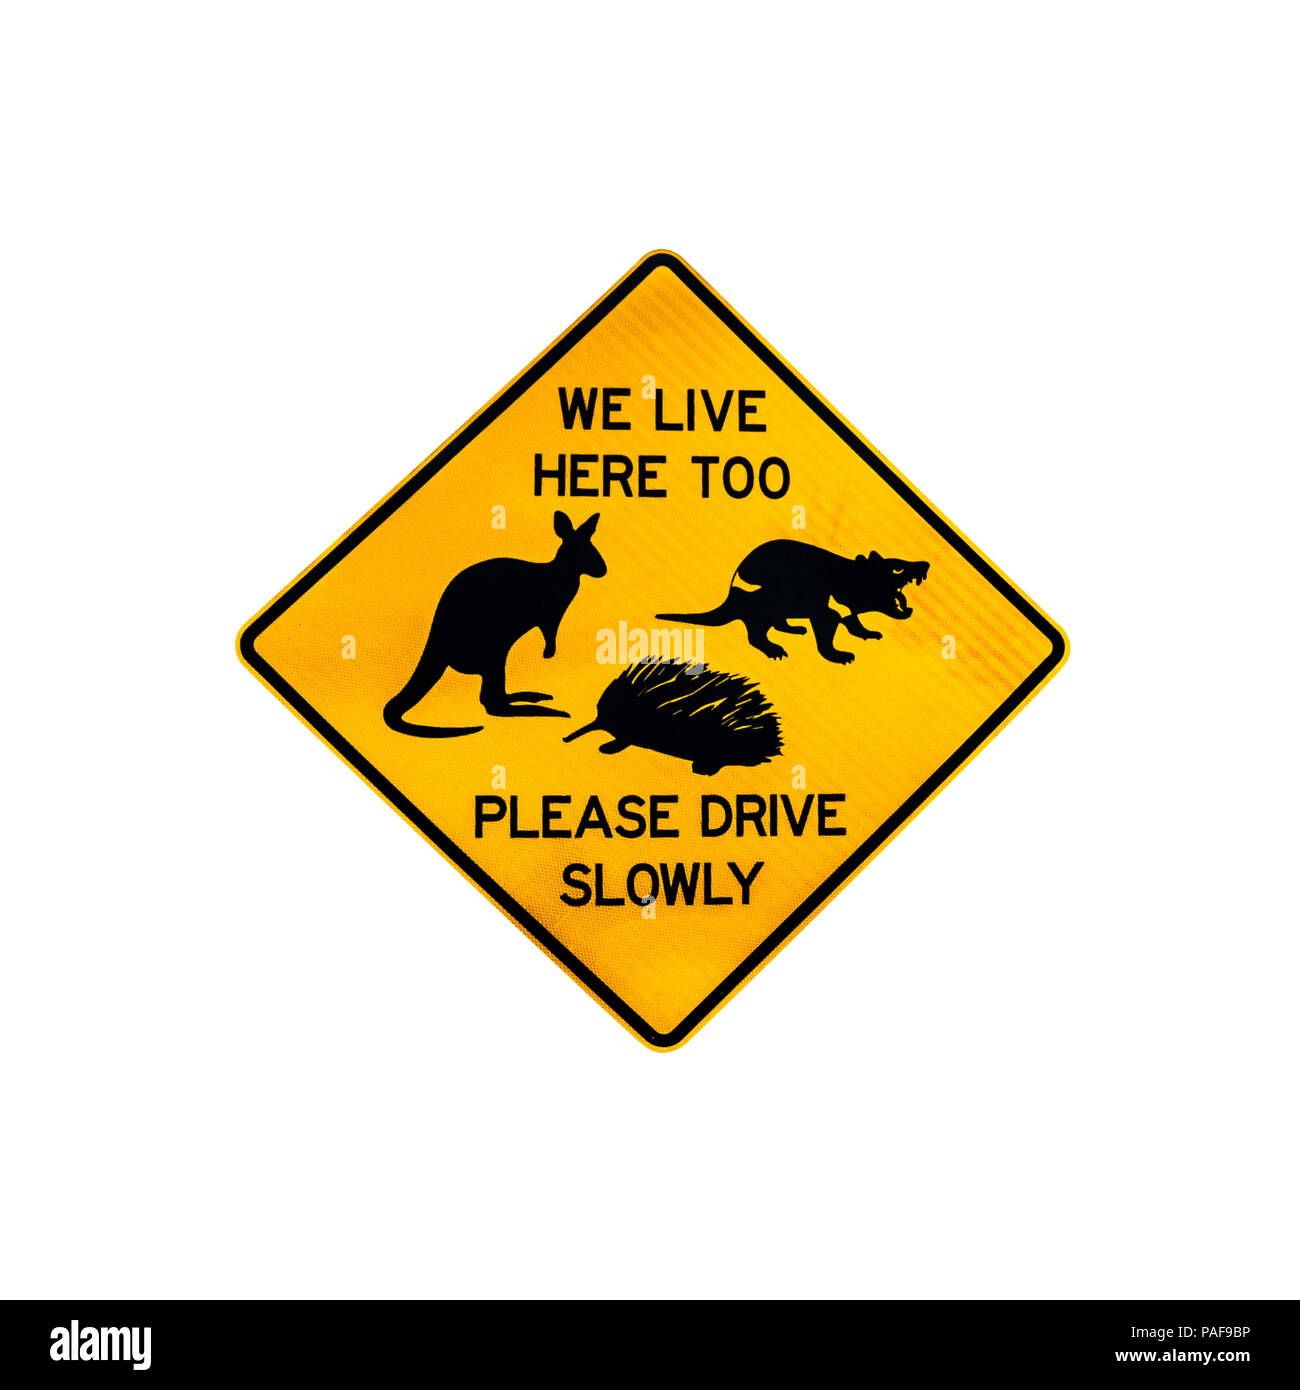 Tasmanian wildlife warning sign for tasmanian devil, kangaroo and echidna crossing the road in Tasmania. Isolated on white. Stock Photo